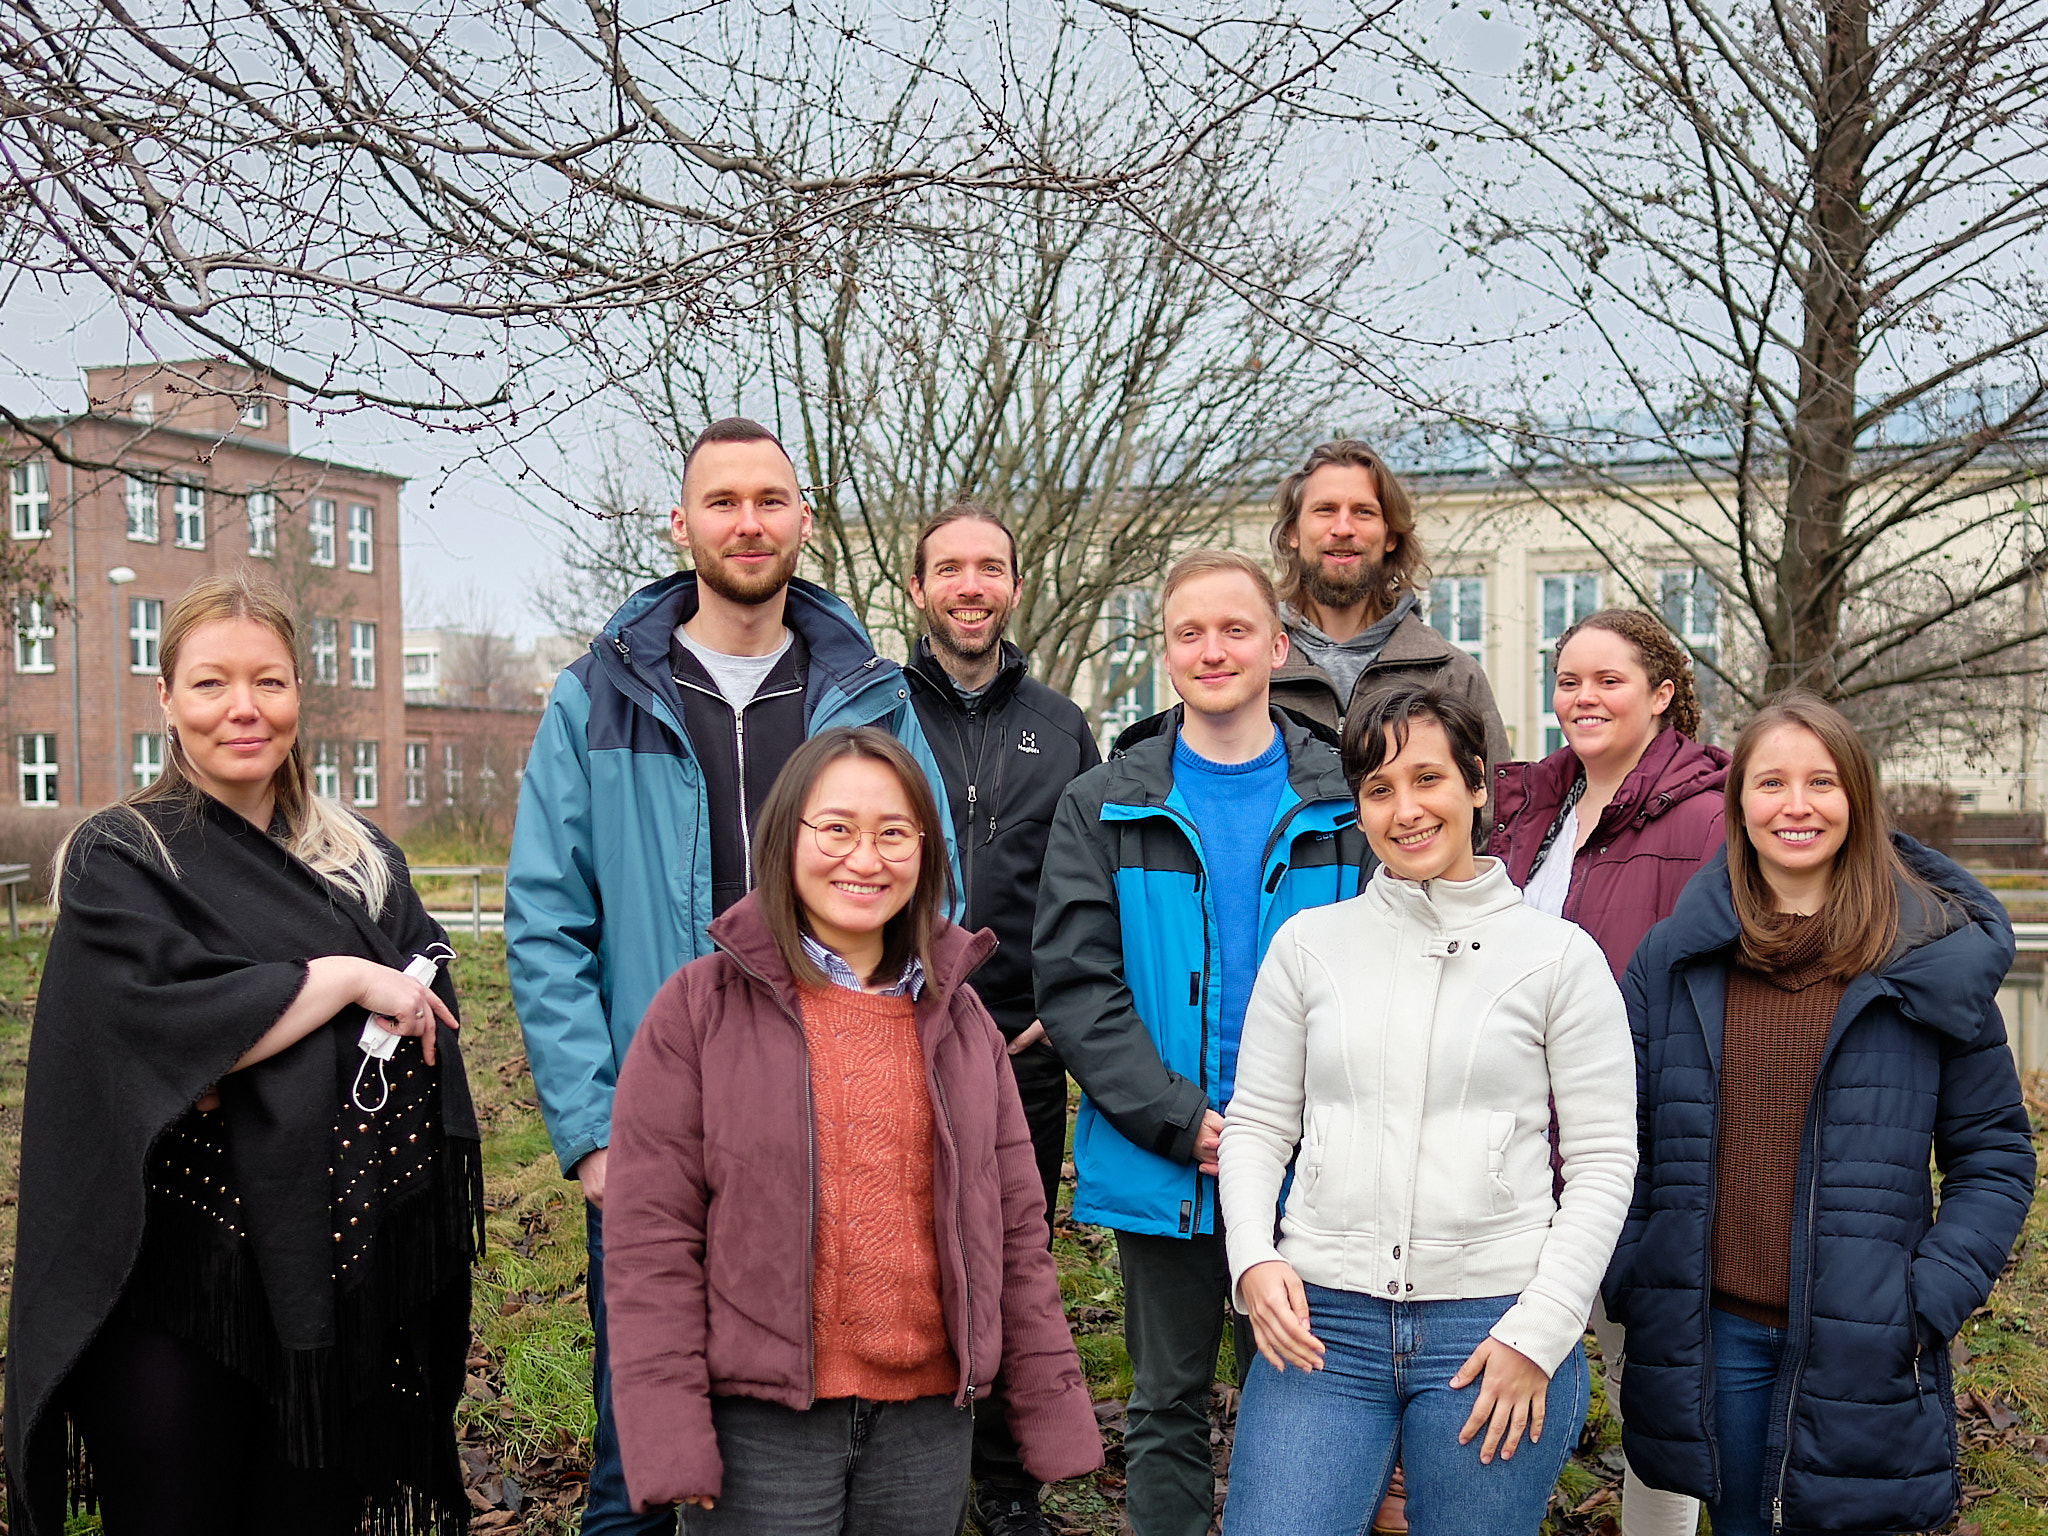 The BioGeoOmics team in December 2021 (from left to right): Silvia, Johann, Limei, Oliver, Martin, Jan, Rebecca, Elaine, Maria.